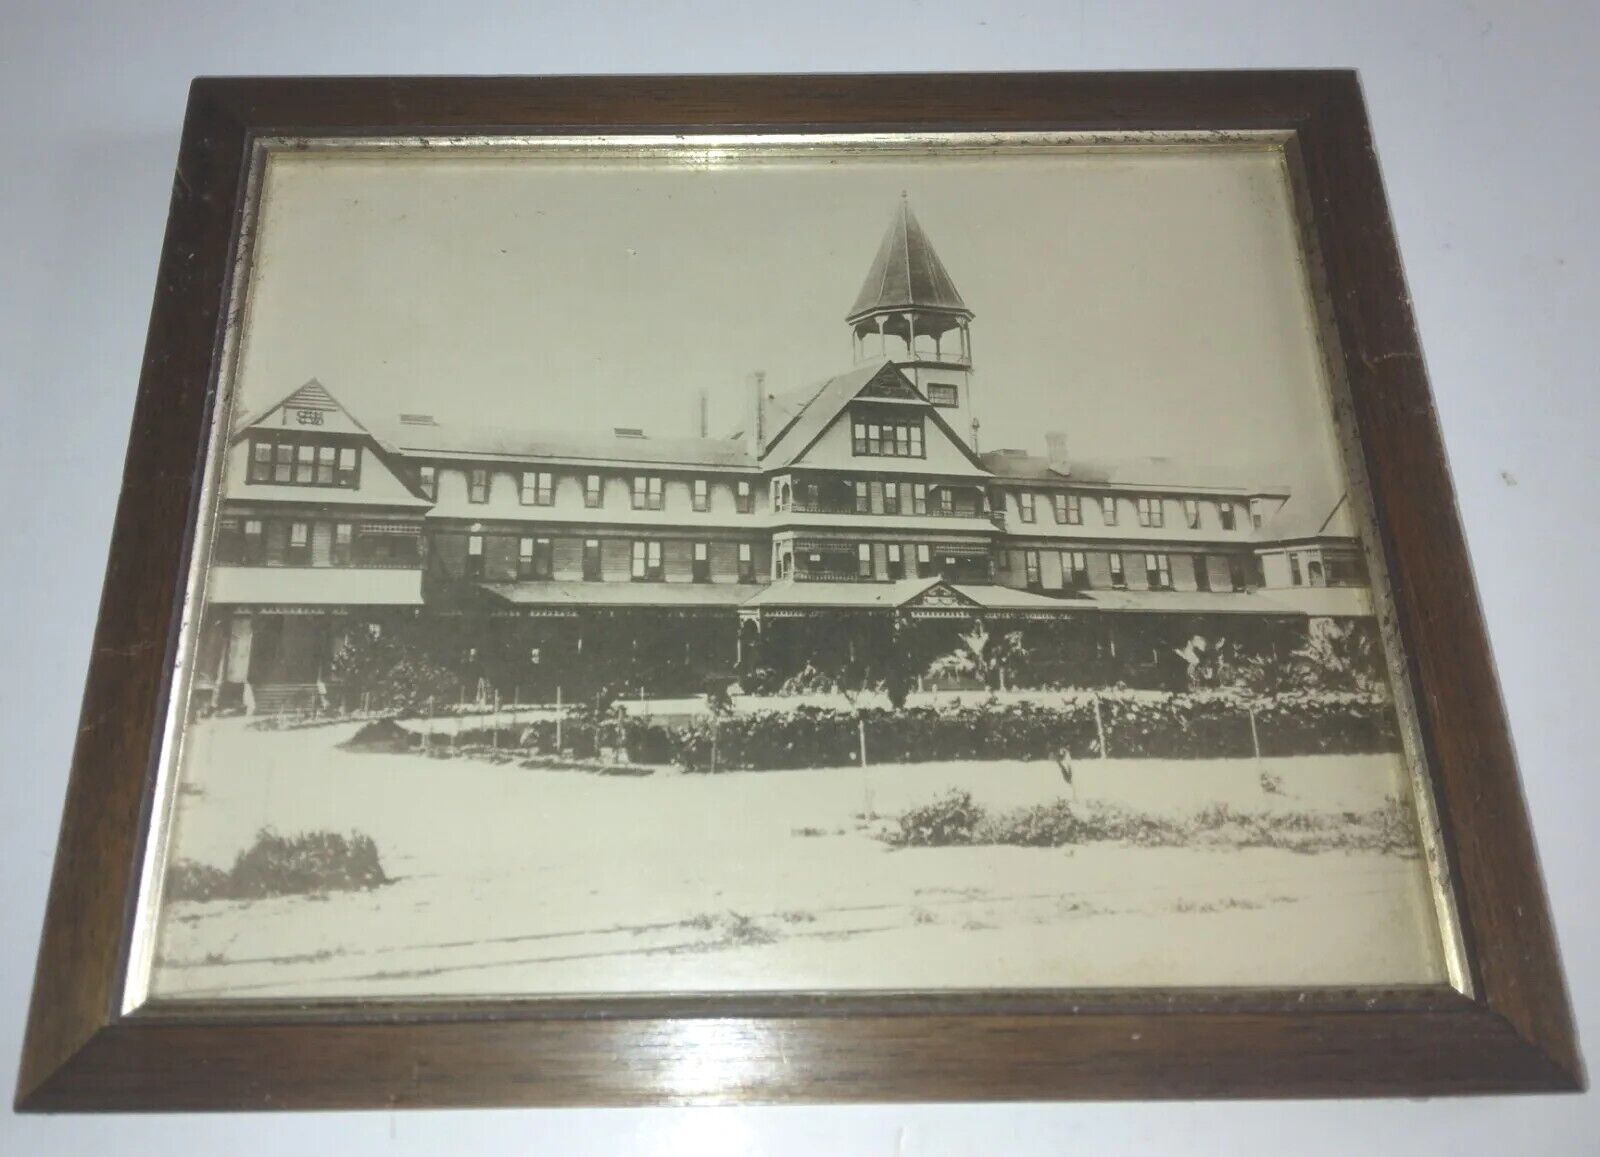  Santa Monica CA Vintage framed photo glass California history HOTEL ARCADIA 